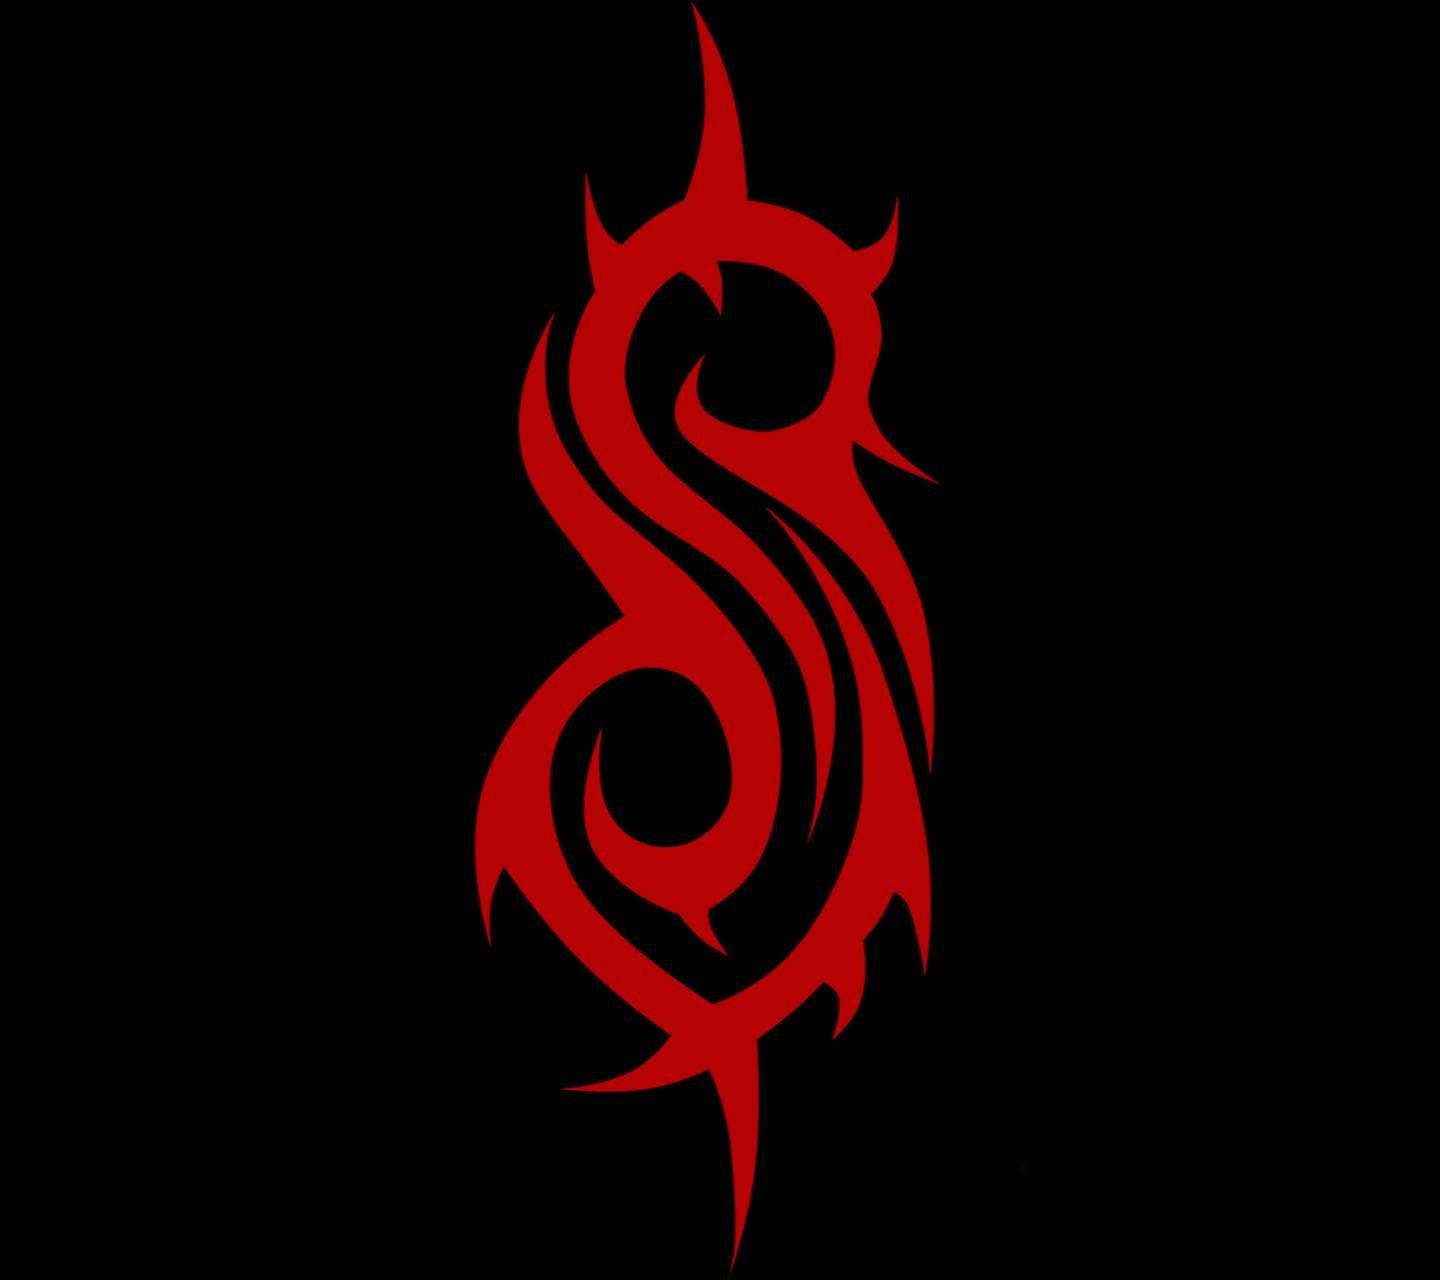 Slipknot Red S Logo Picture